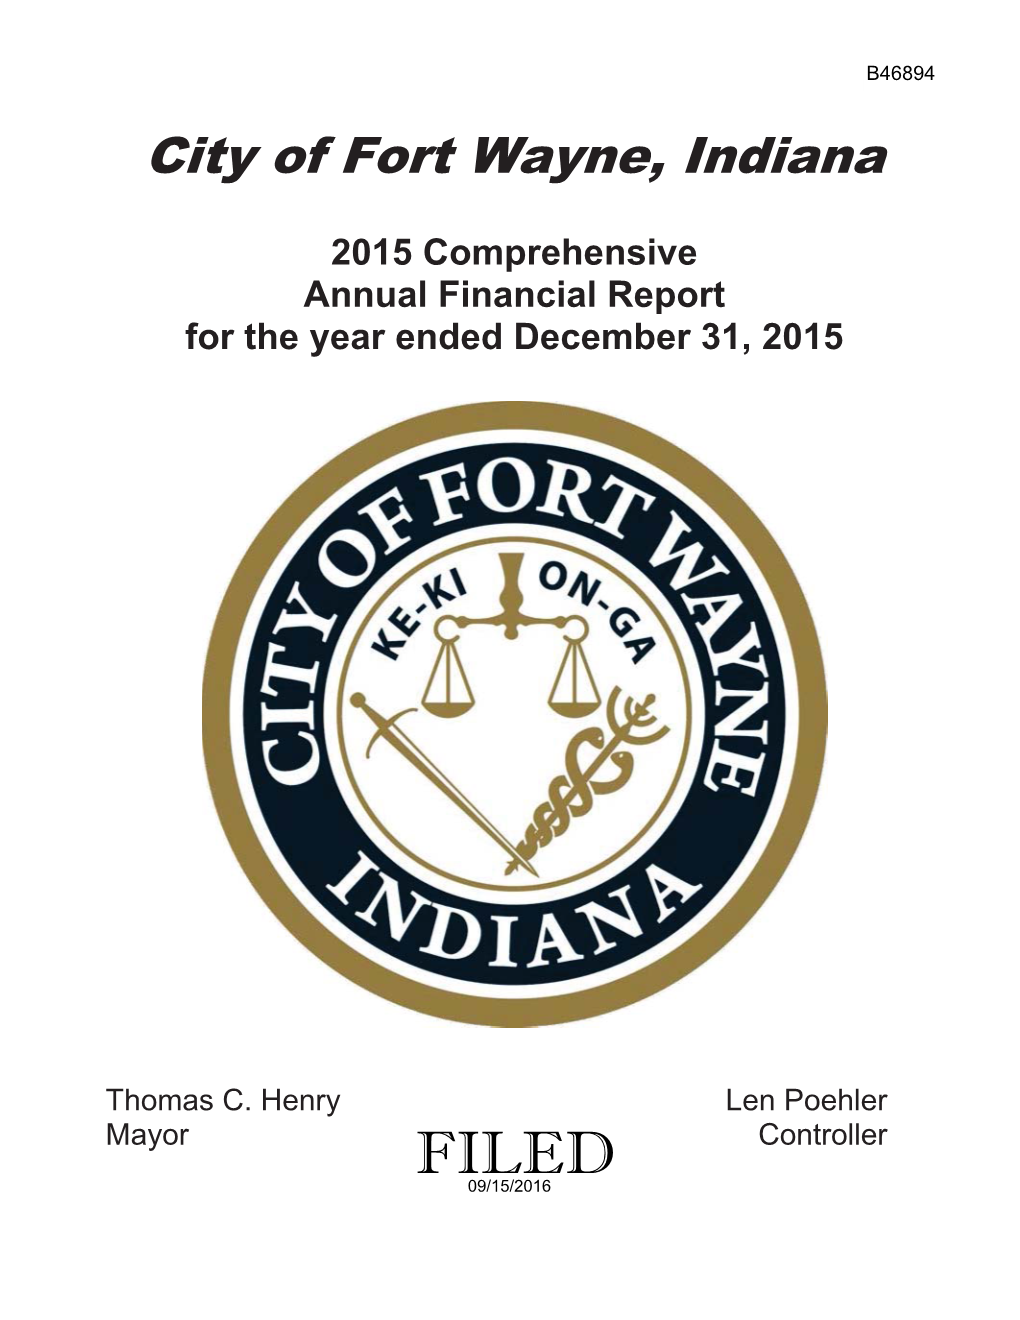 City of Fort Wayne, Indiana